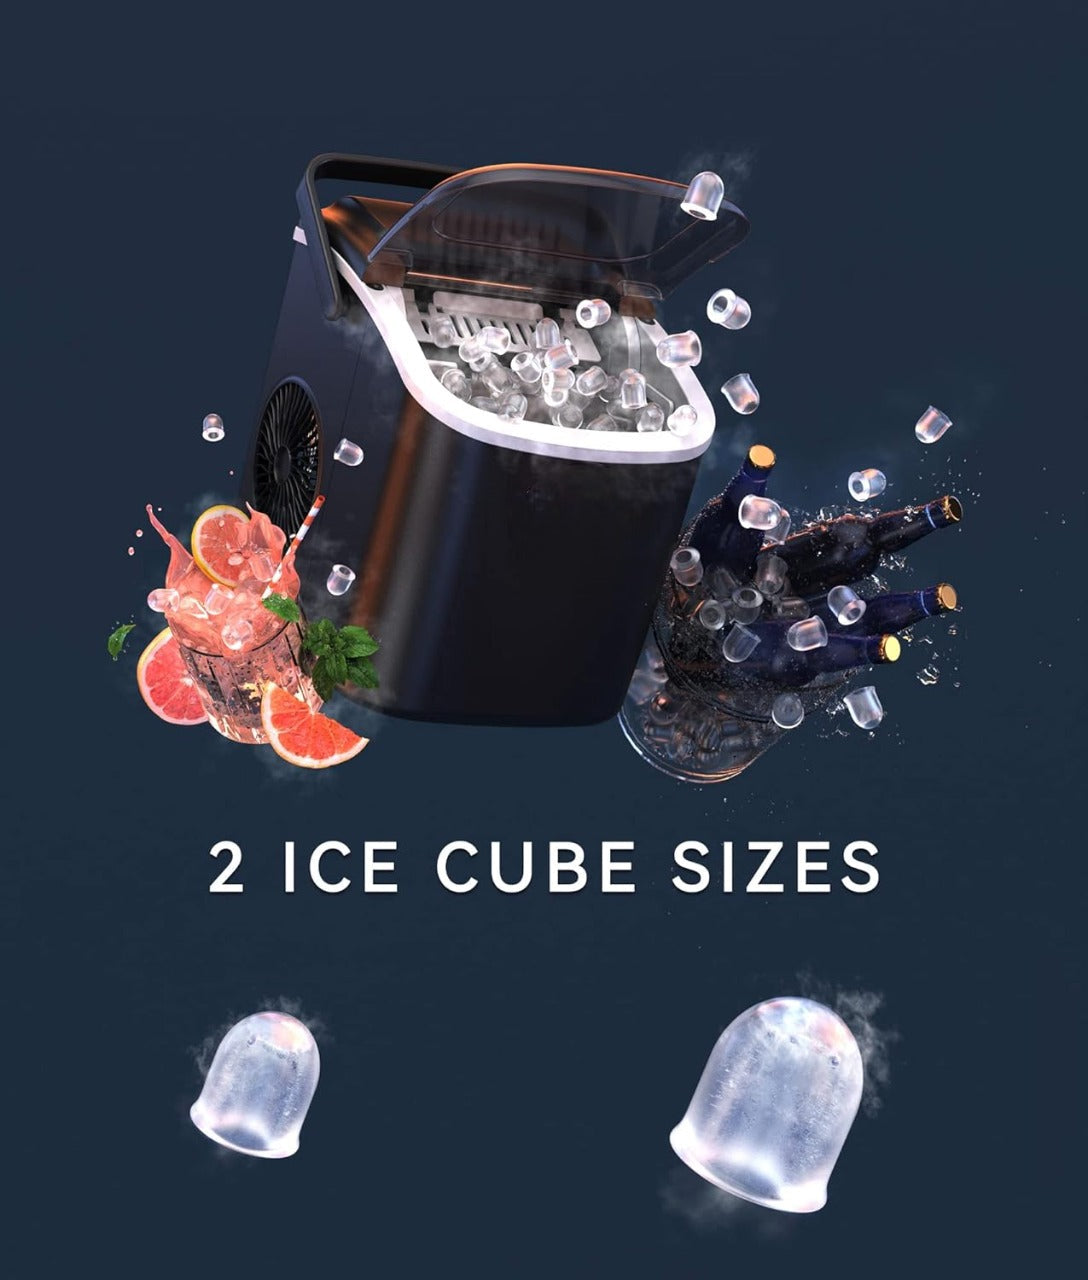 Multi Freezer - Ice Maker